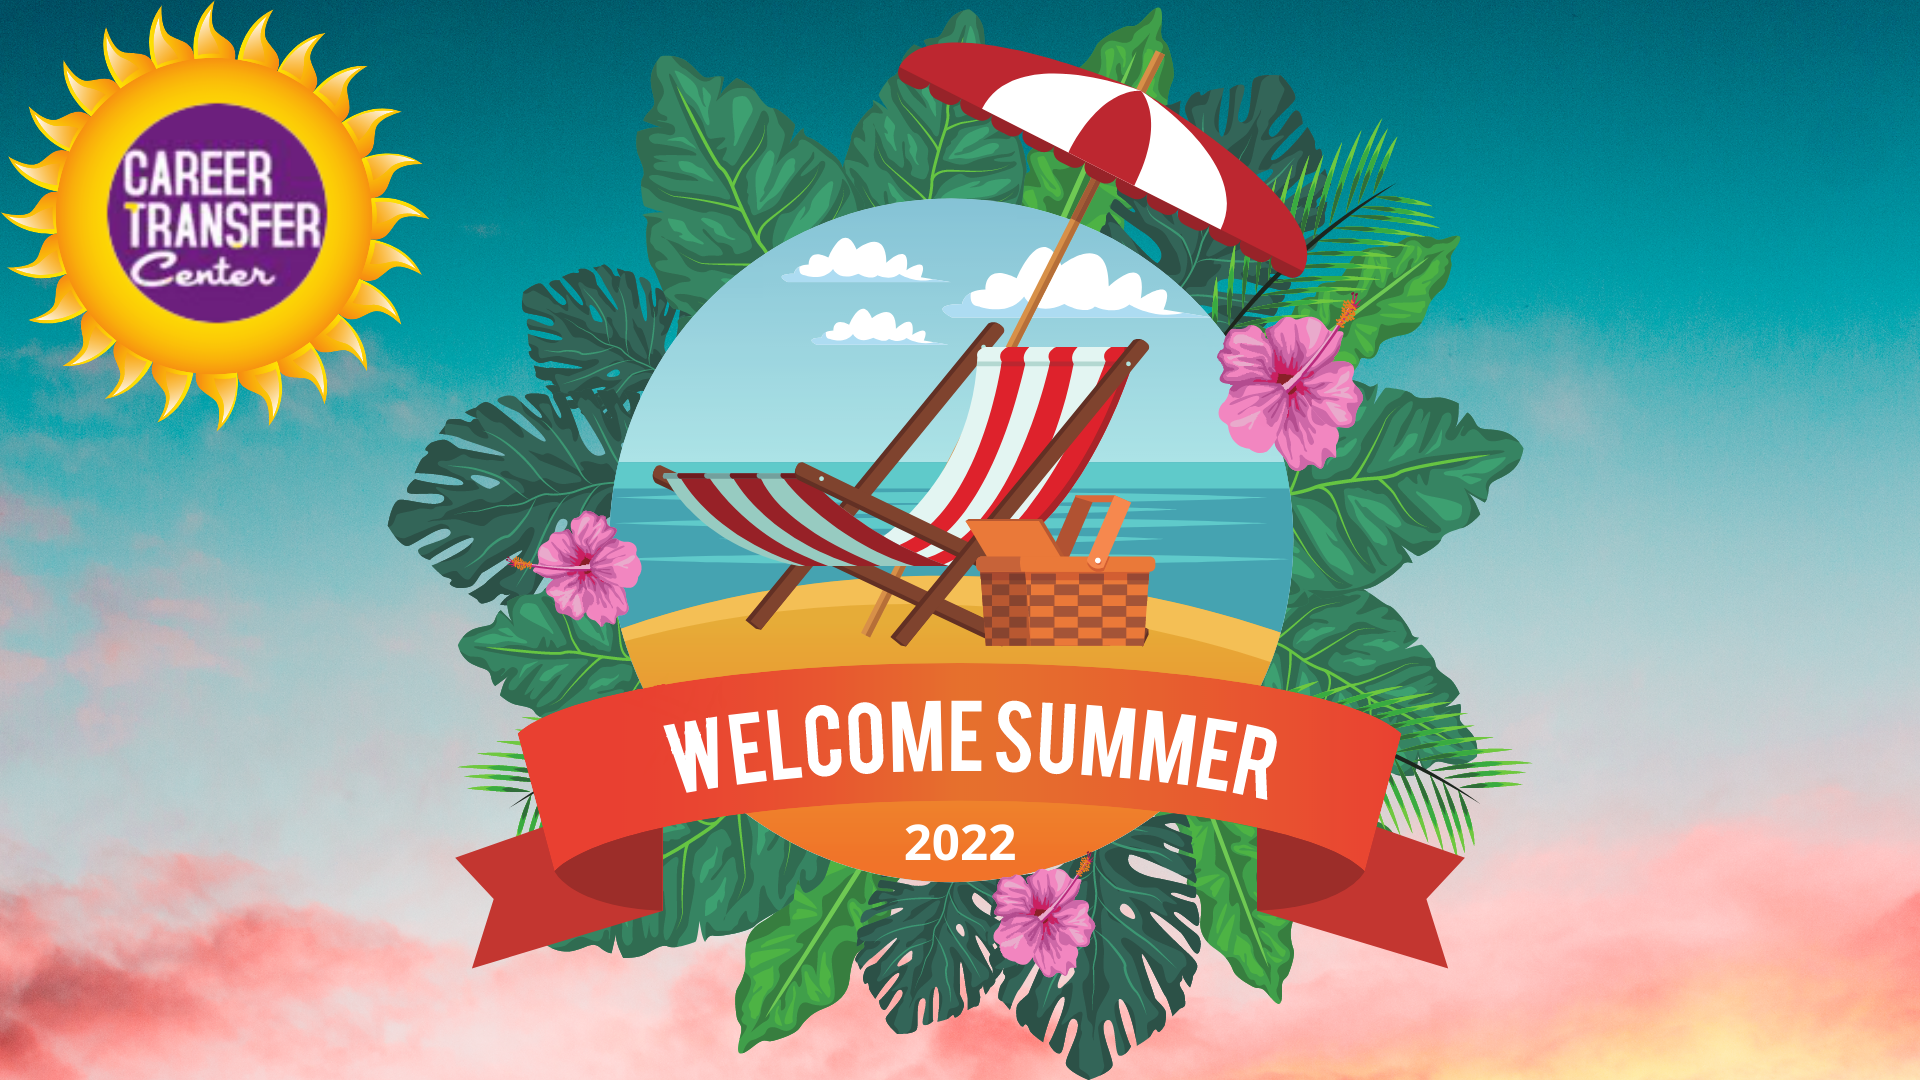 Welcome Summer 2022